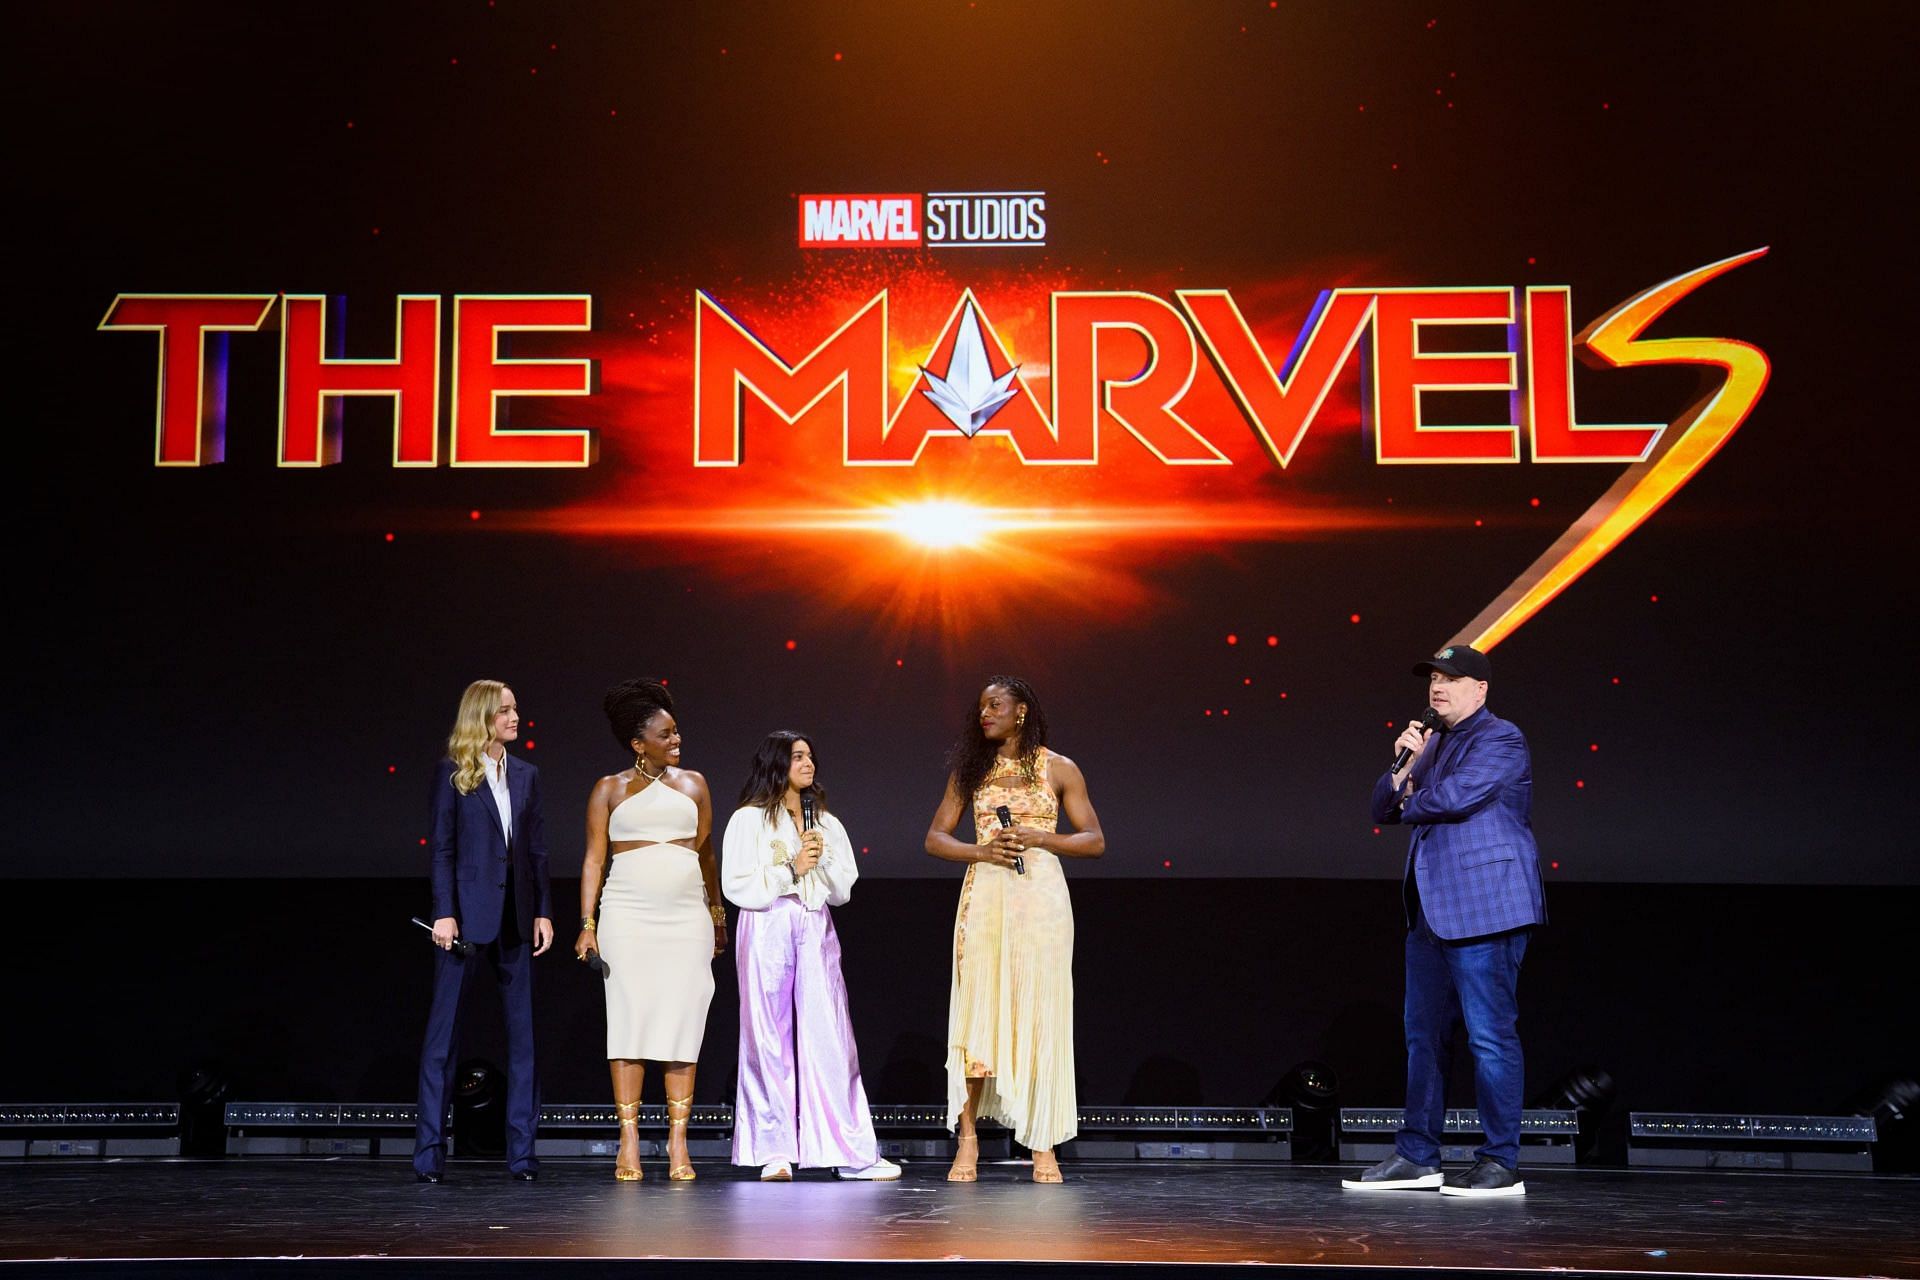 Captain Marvel 2 is the most awaited Marvel movie so far. (Image via Marvel)